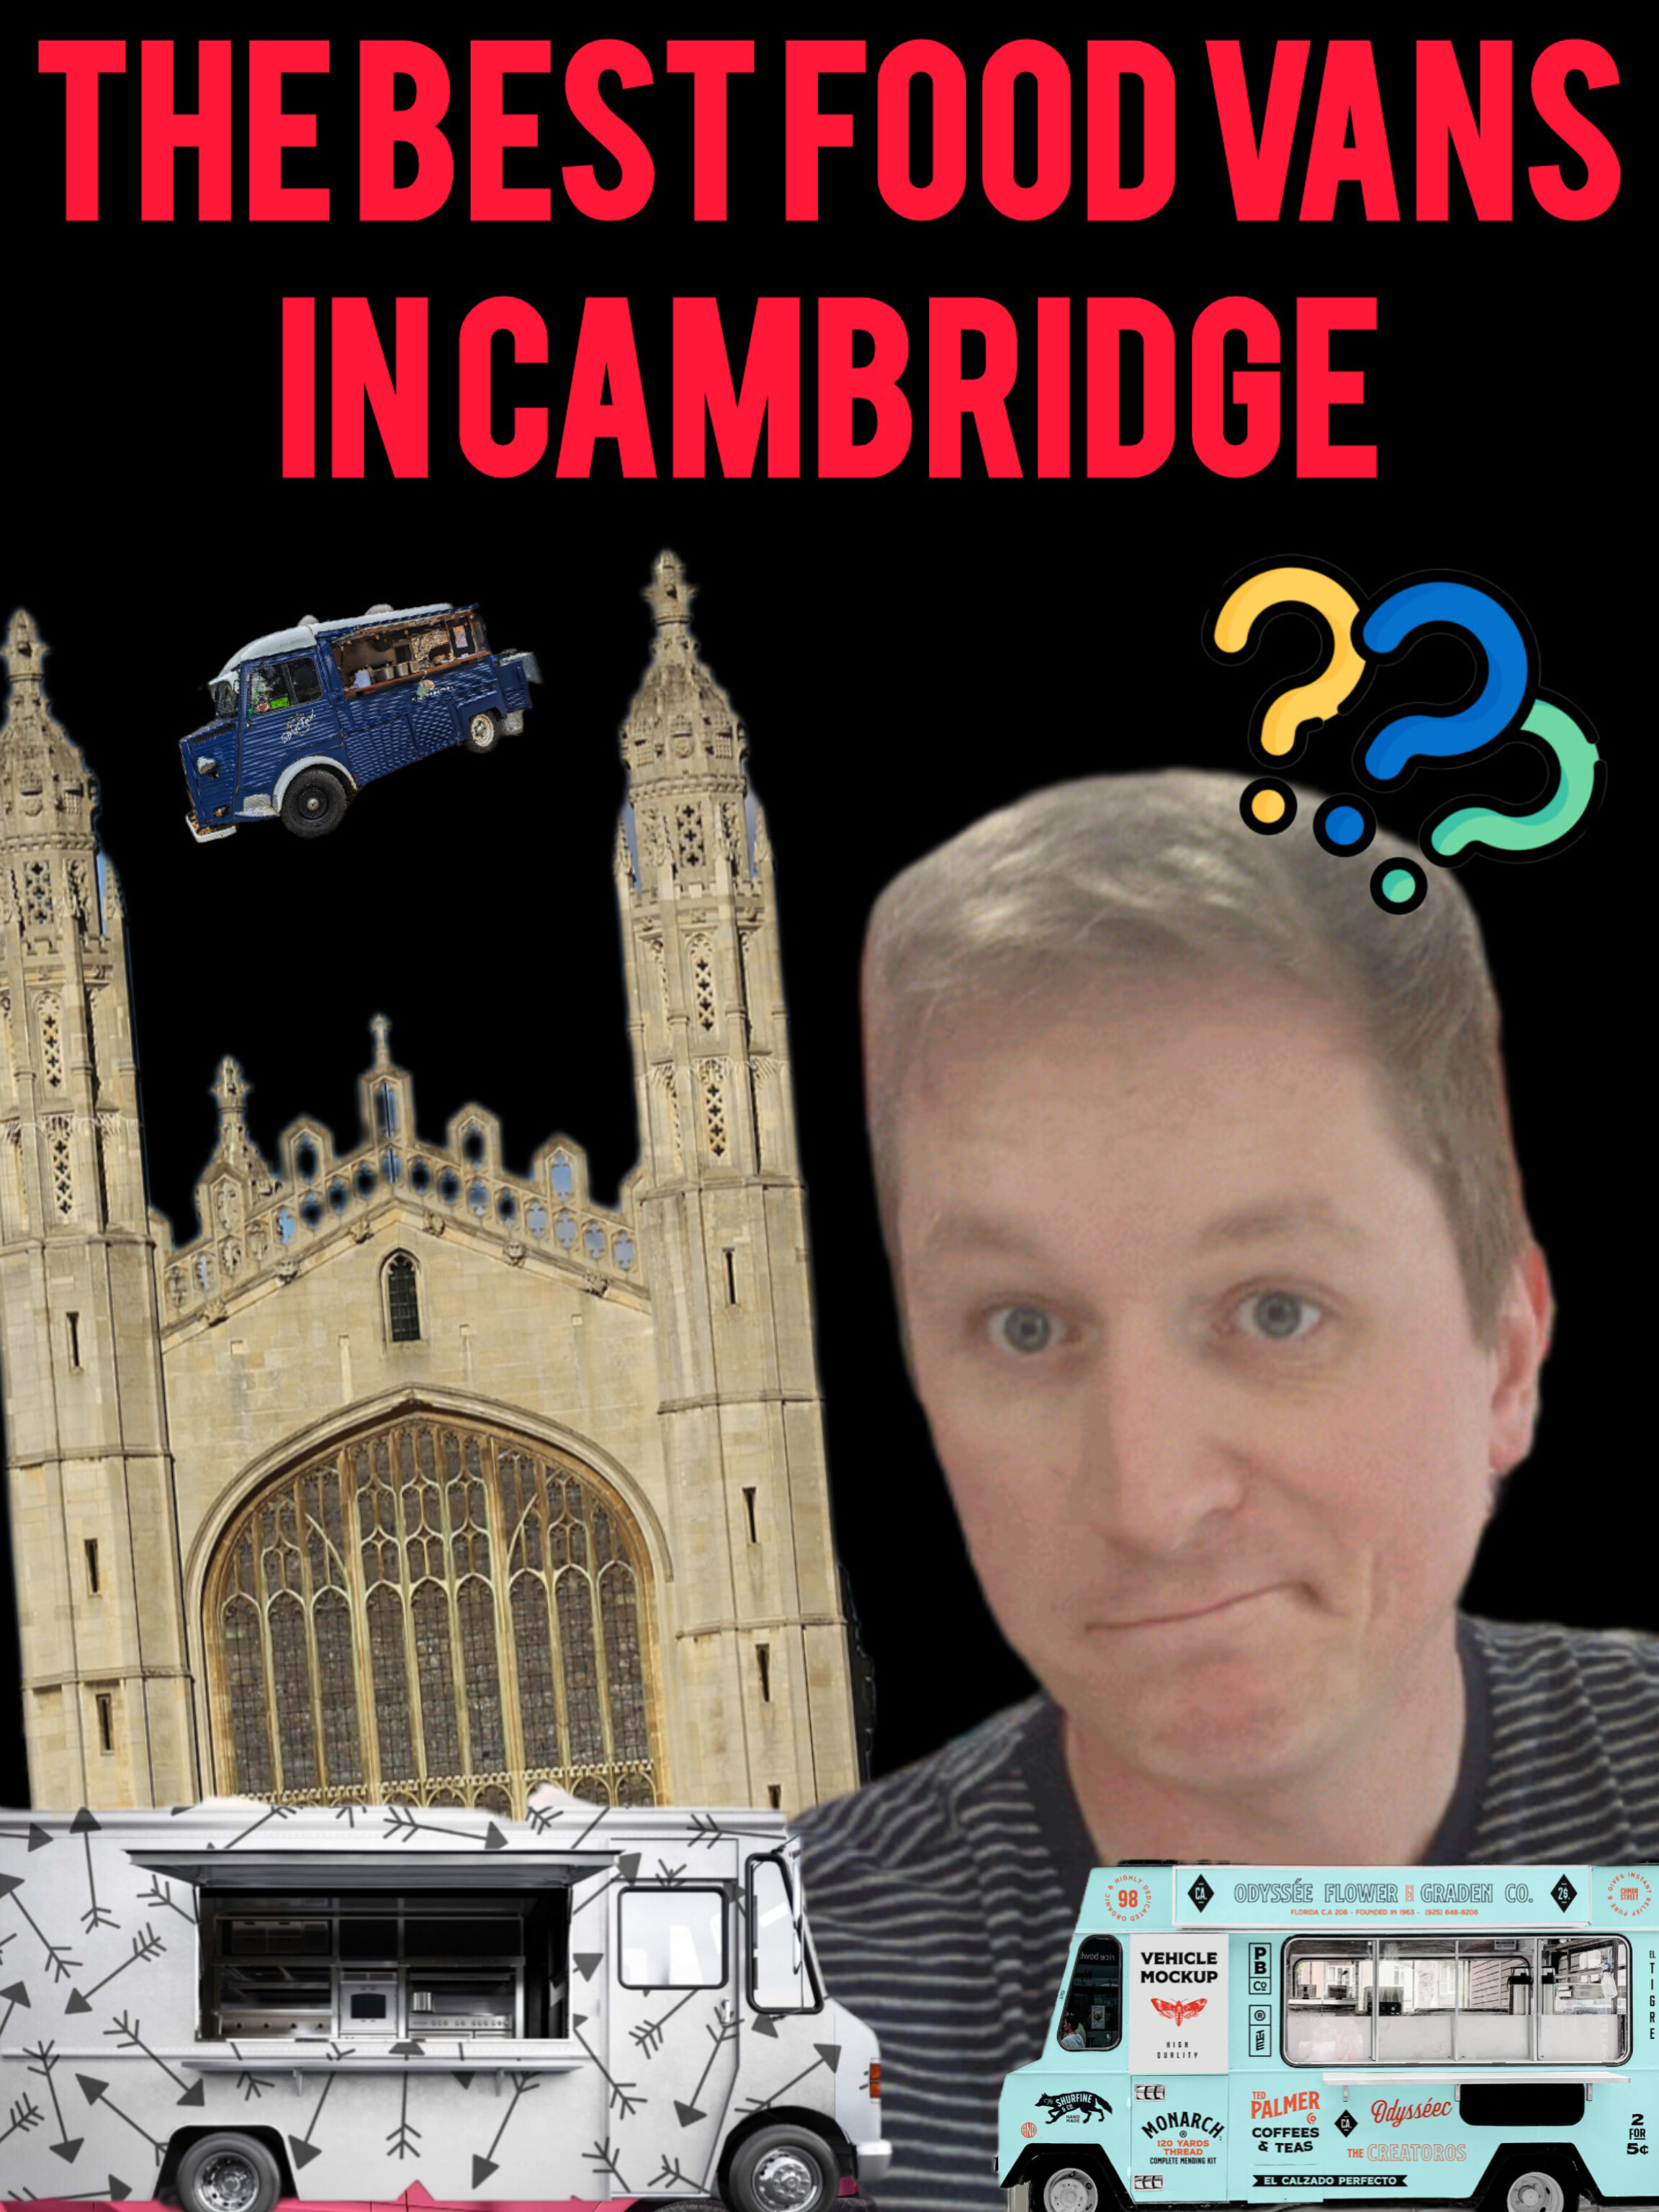 Simon says: The best food vans in Cambridge